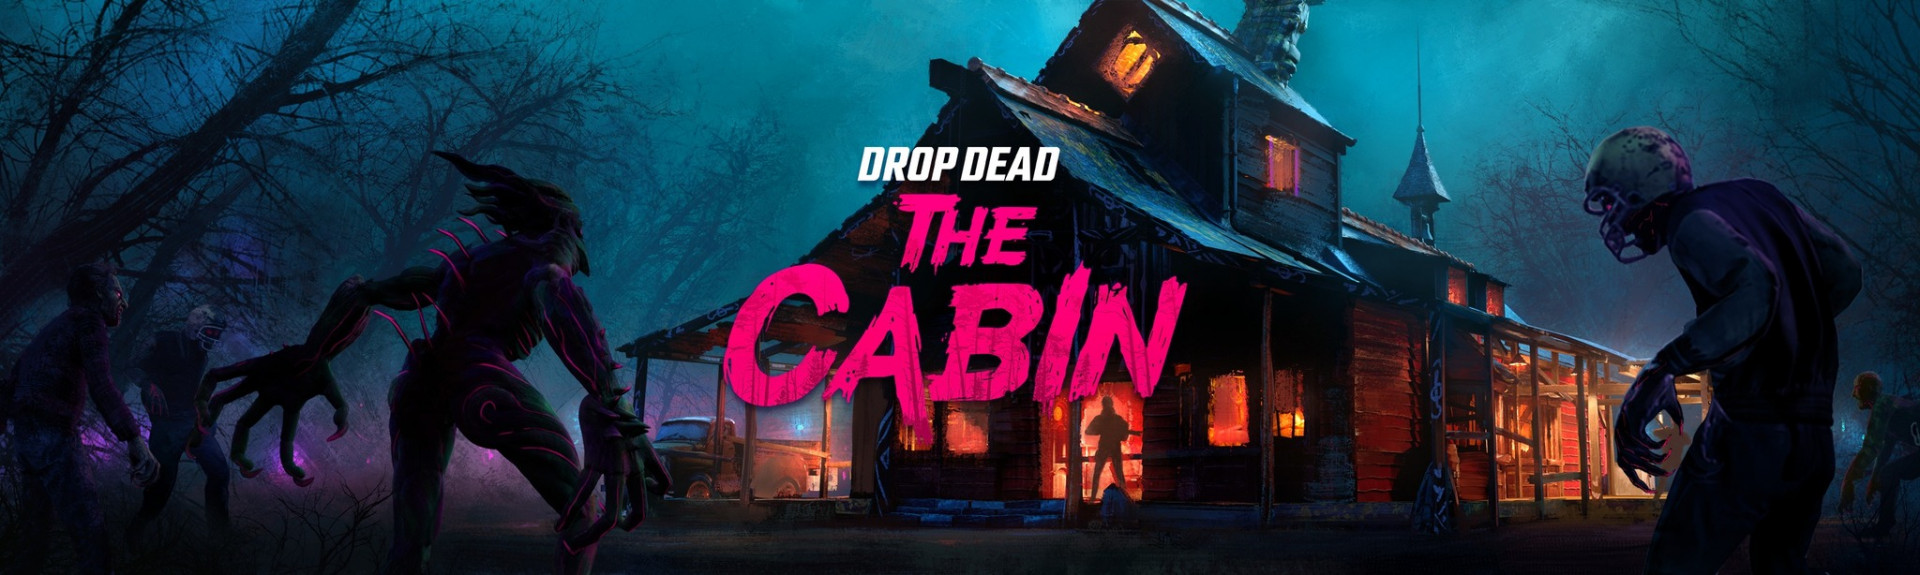 Drop Dead: The Cabin - ANÁLISIS